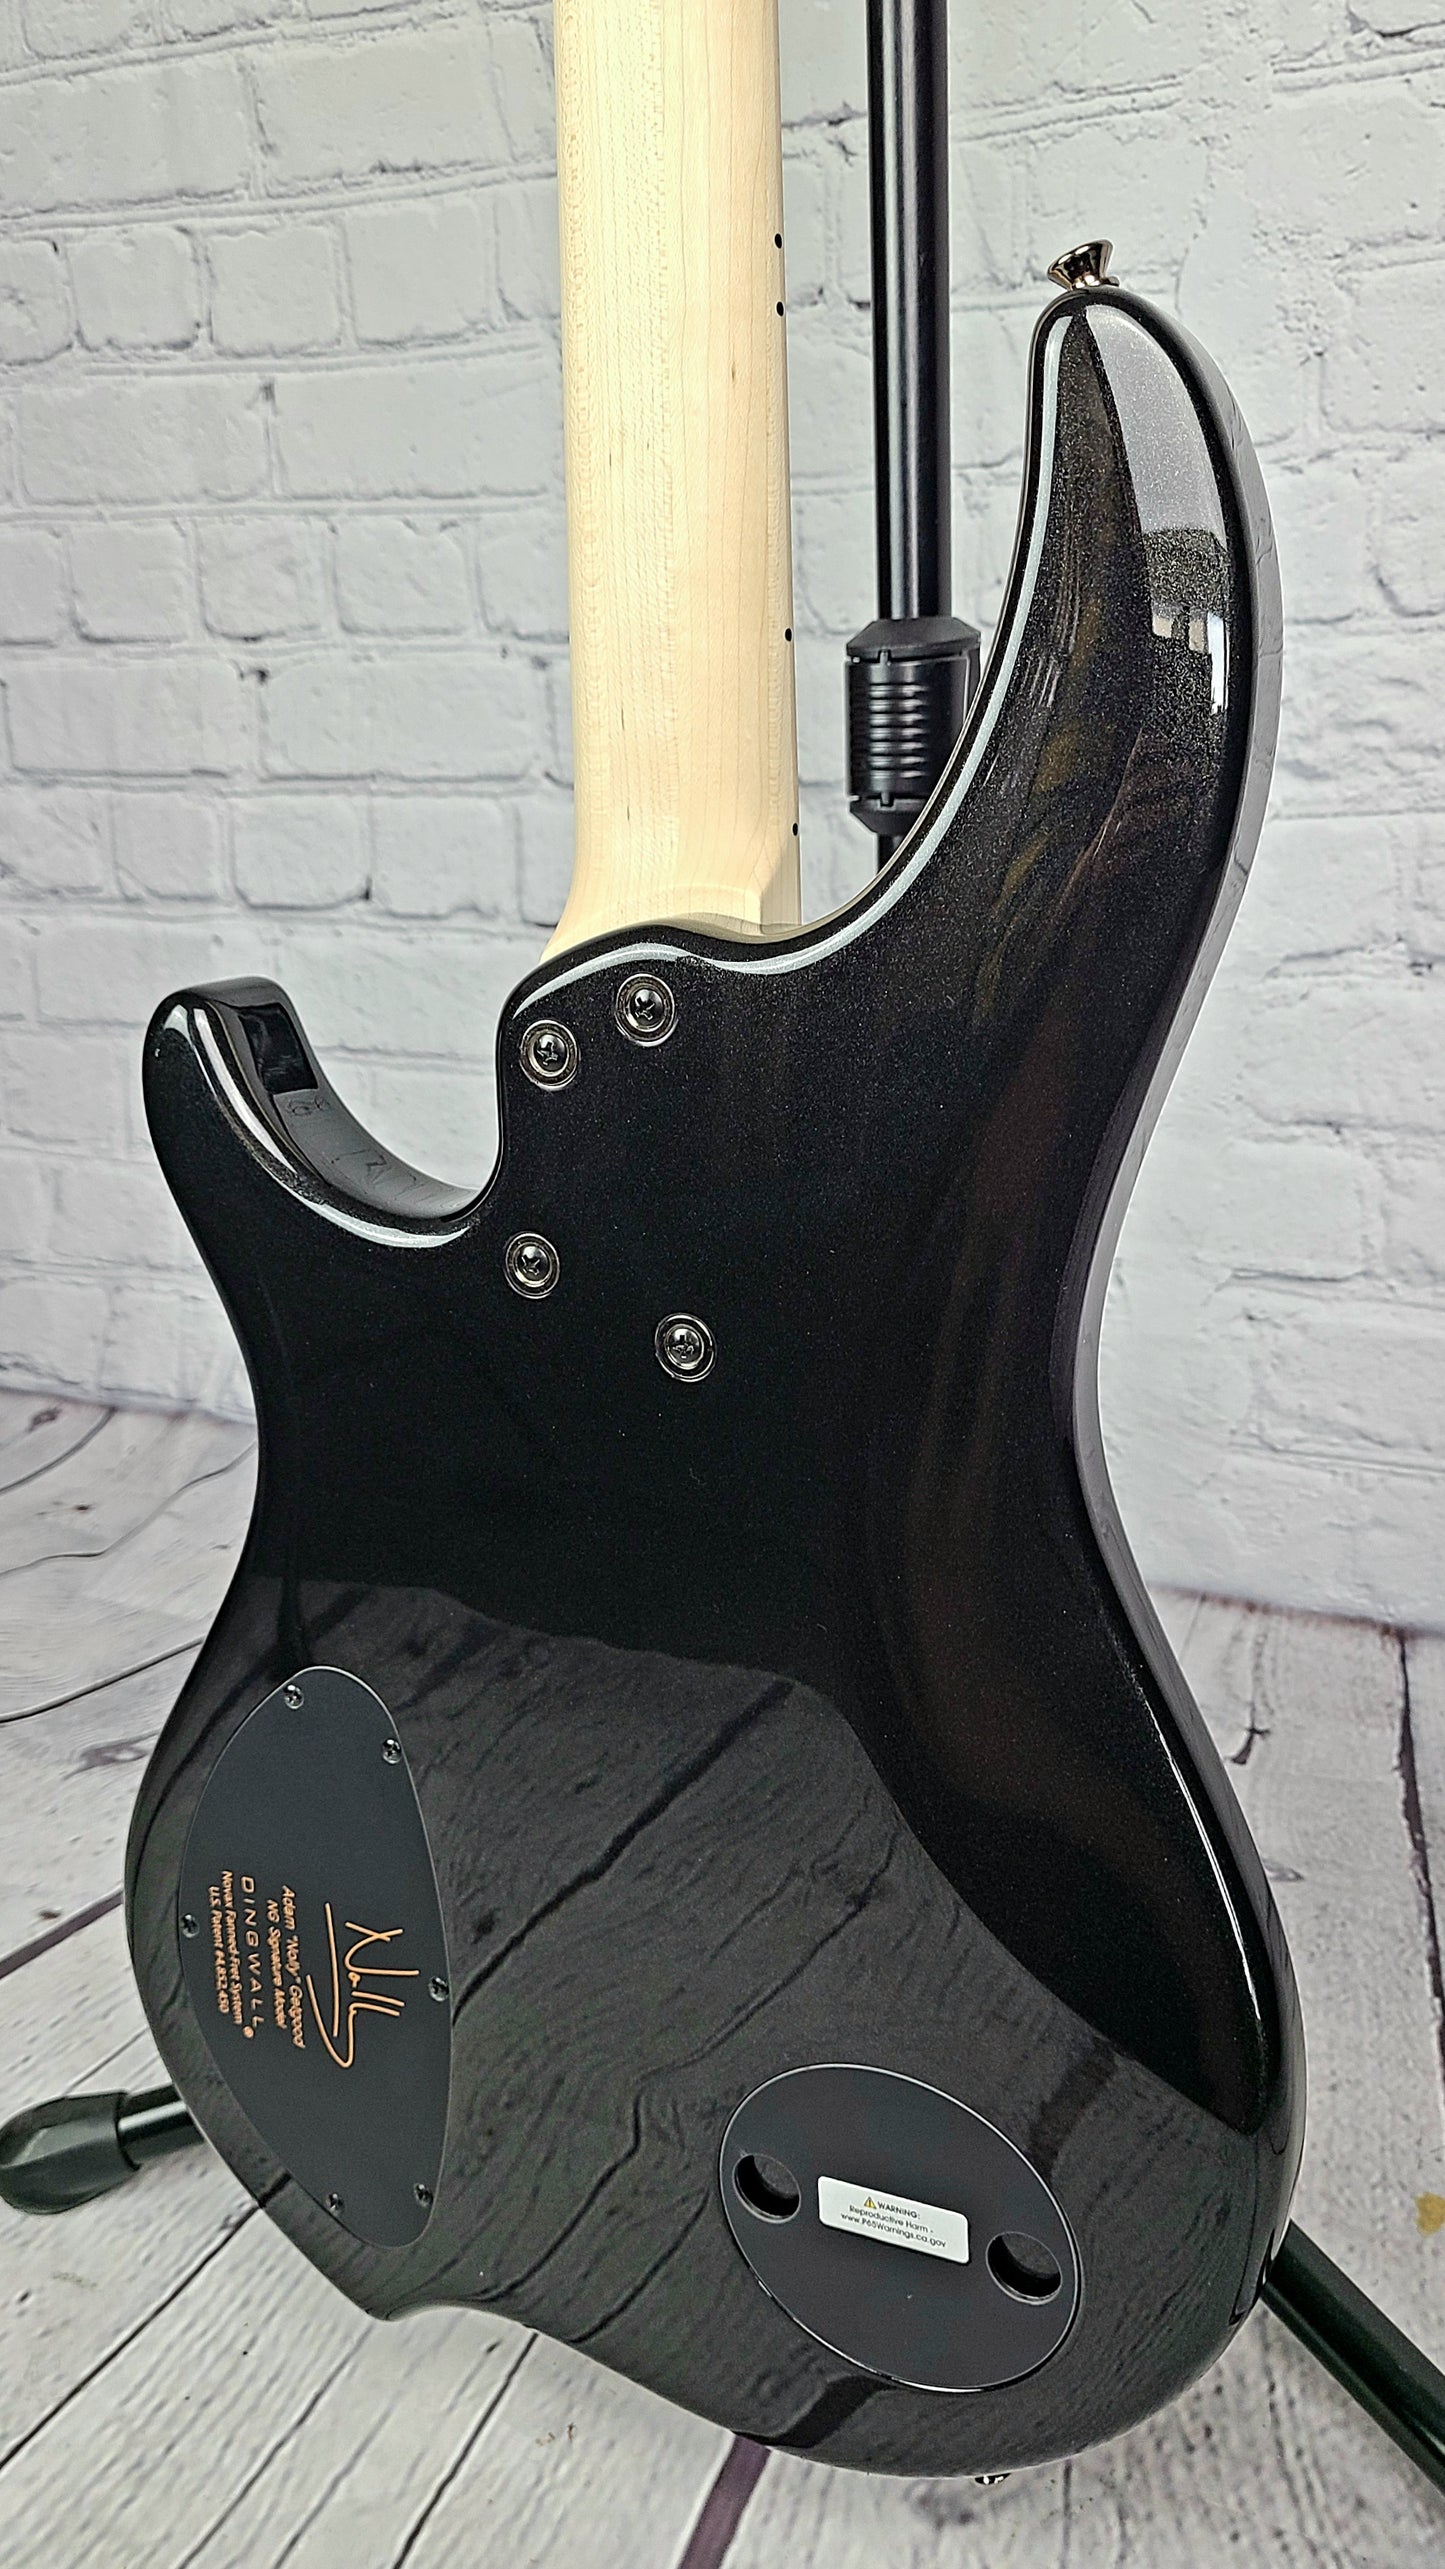 Dingwall NG3 4 String Nolly Bass Guitar Matte Black Maple